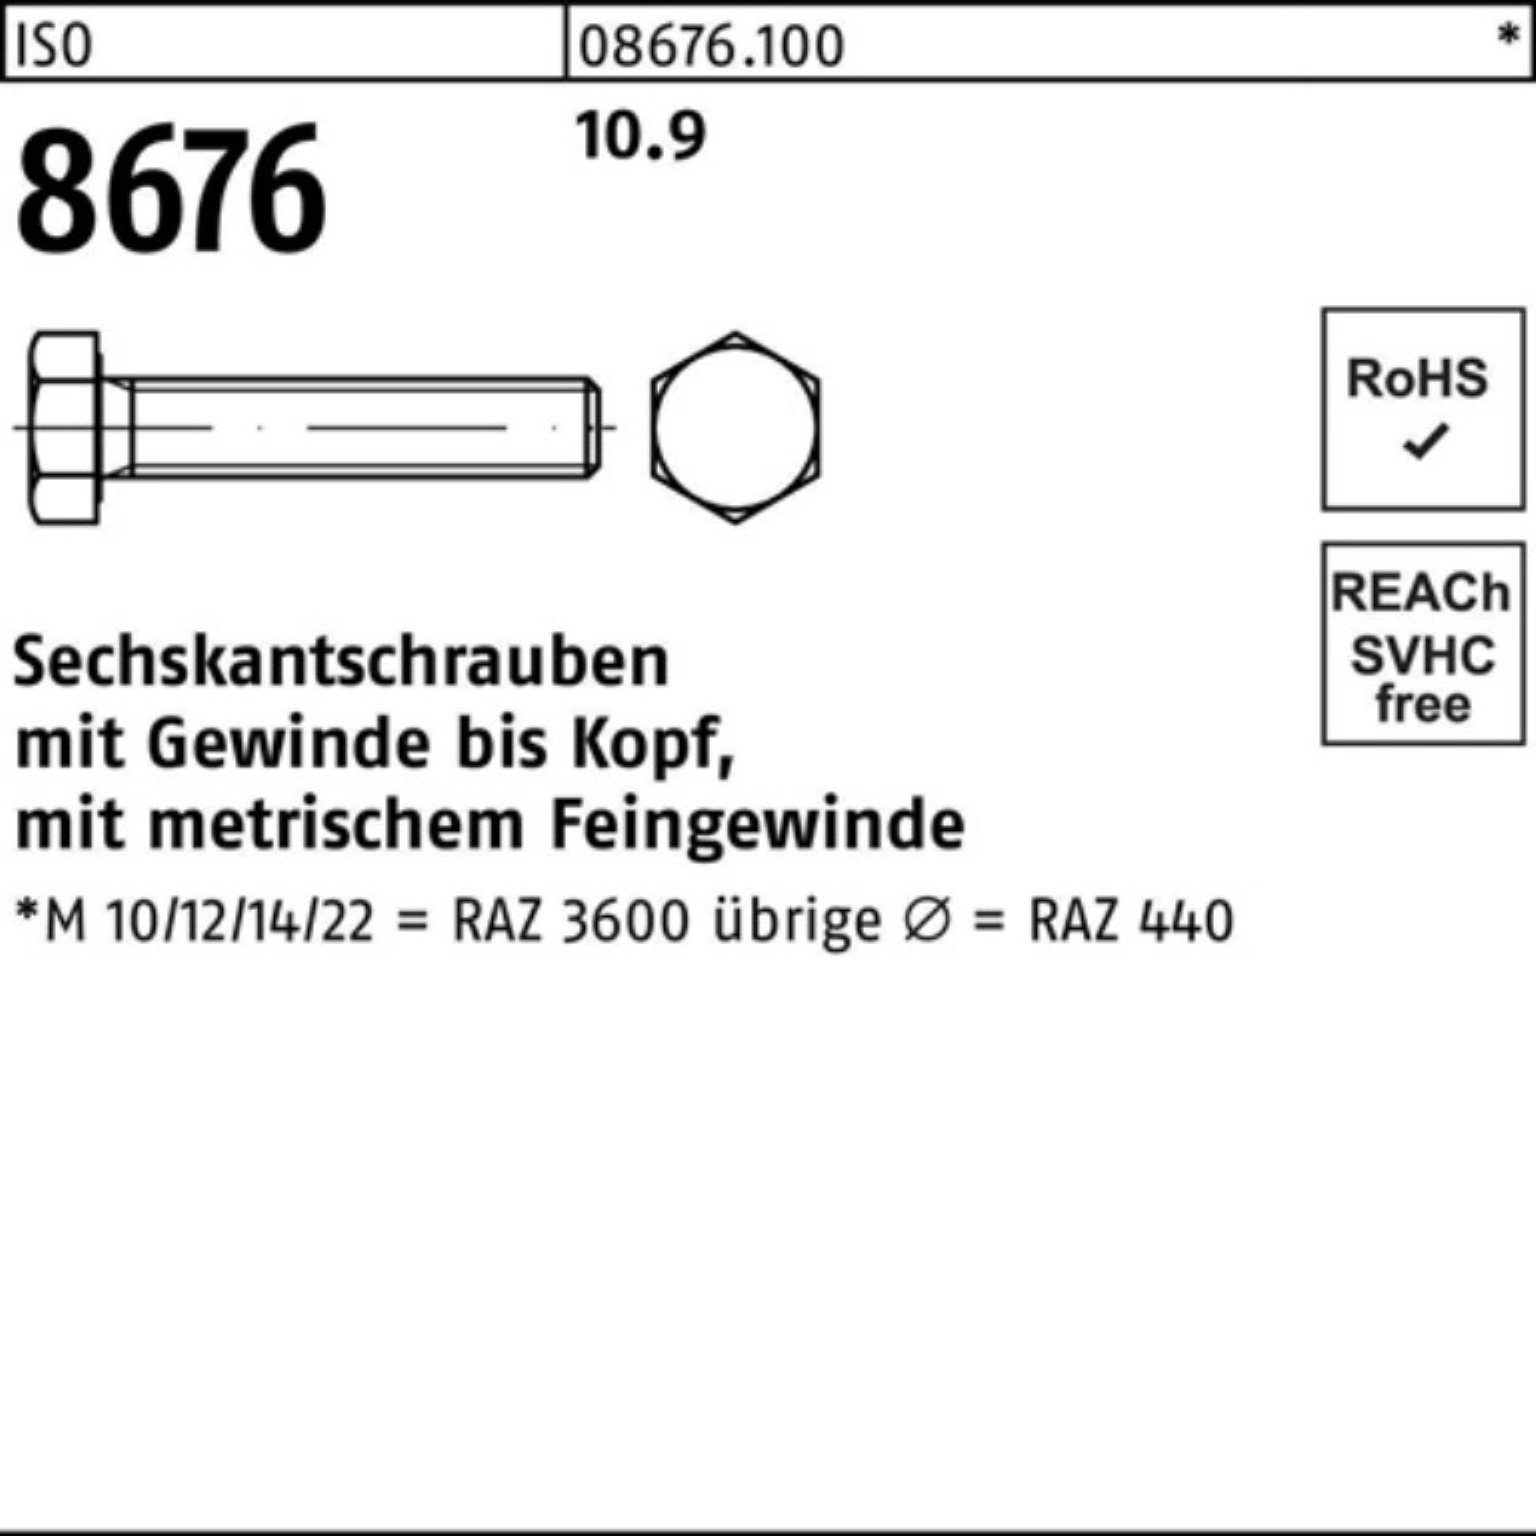 Reyher Sechskantschraube 100er M10x1x100 8676 100 Sechskantschraube ISO Pack 10.9 VG Stück ISO